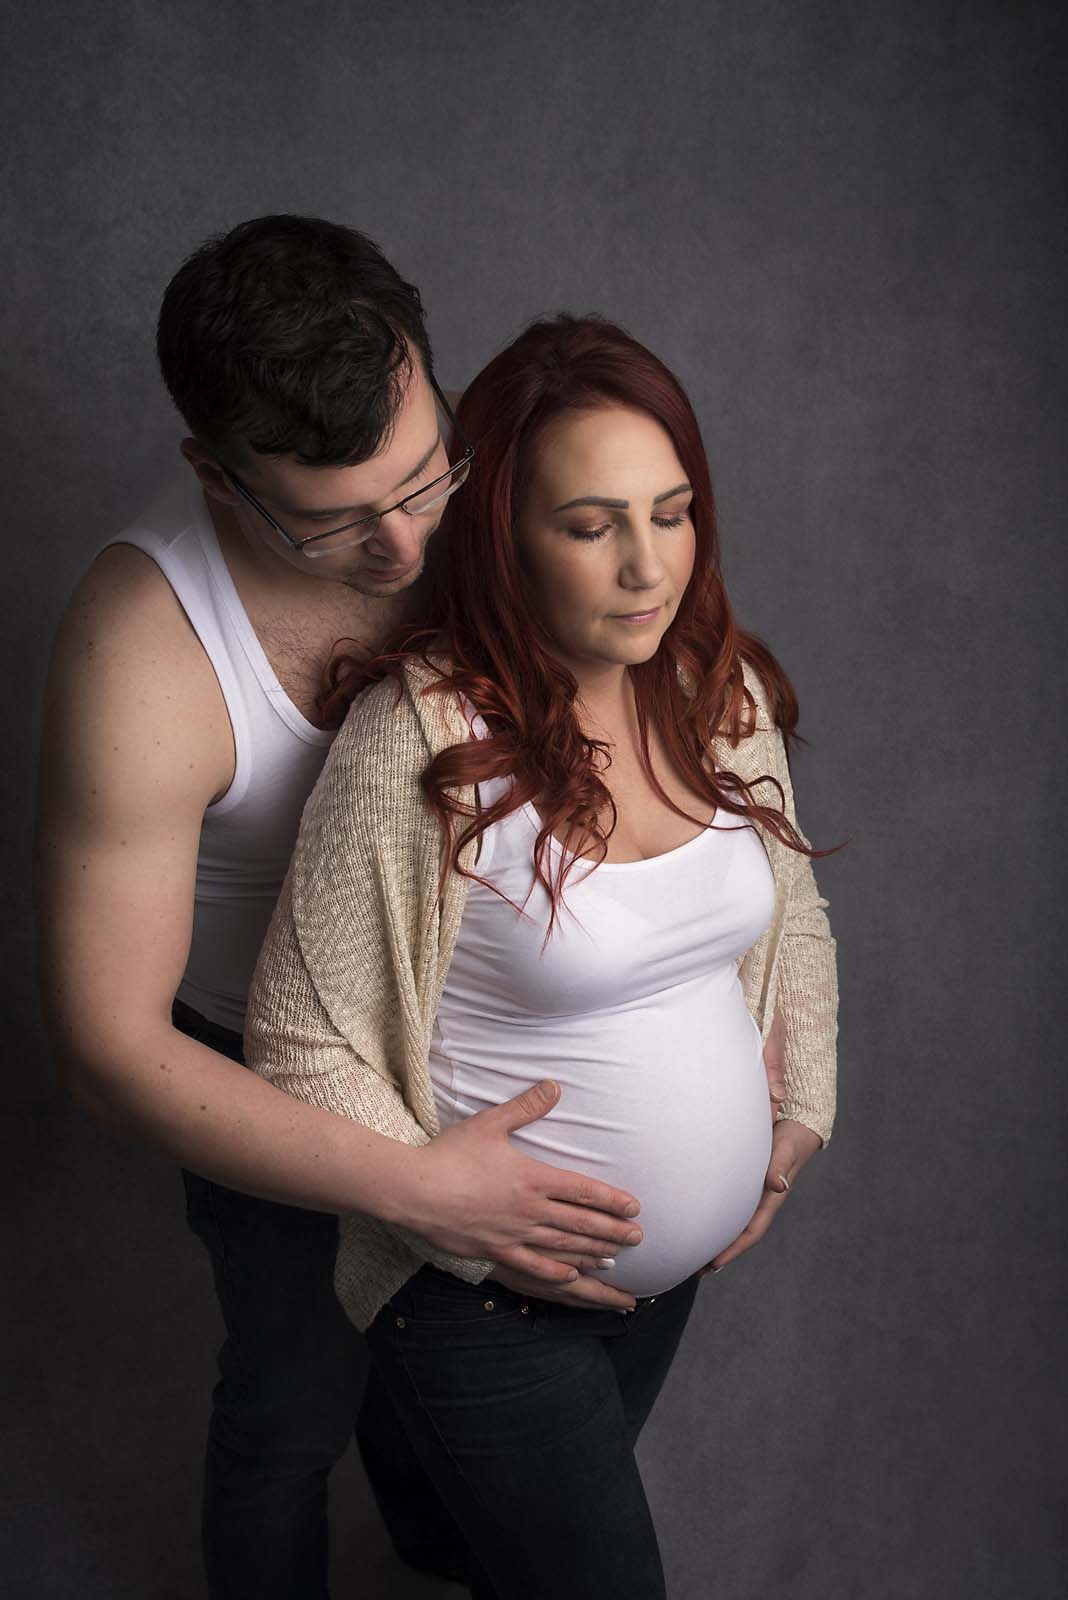 beautiful couple on a maternity photo session photographed by Maternity Photographer Manchester